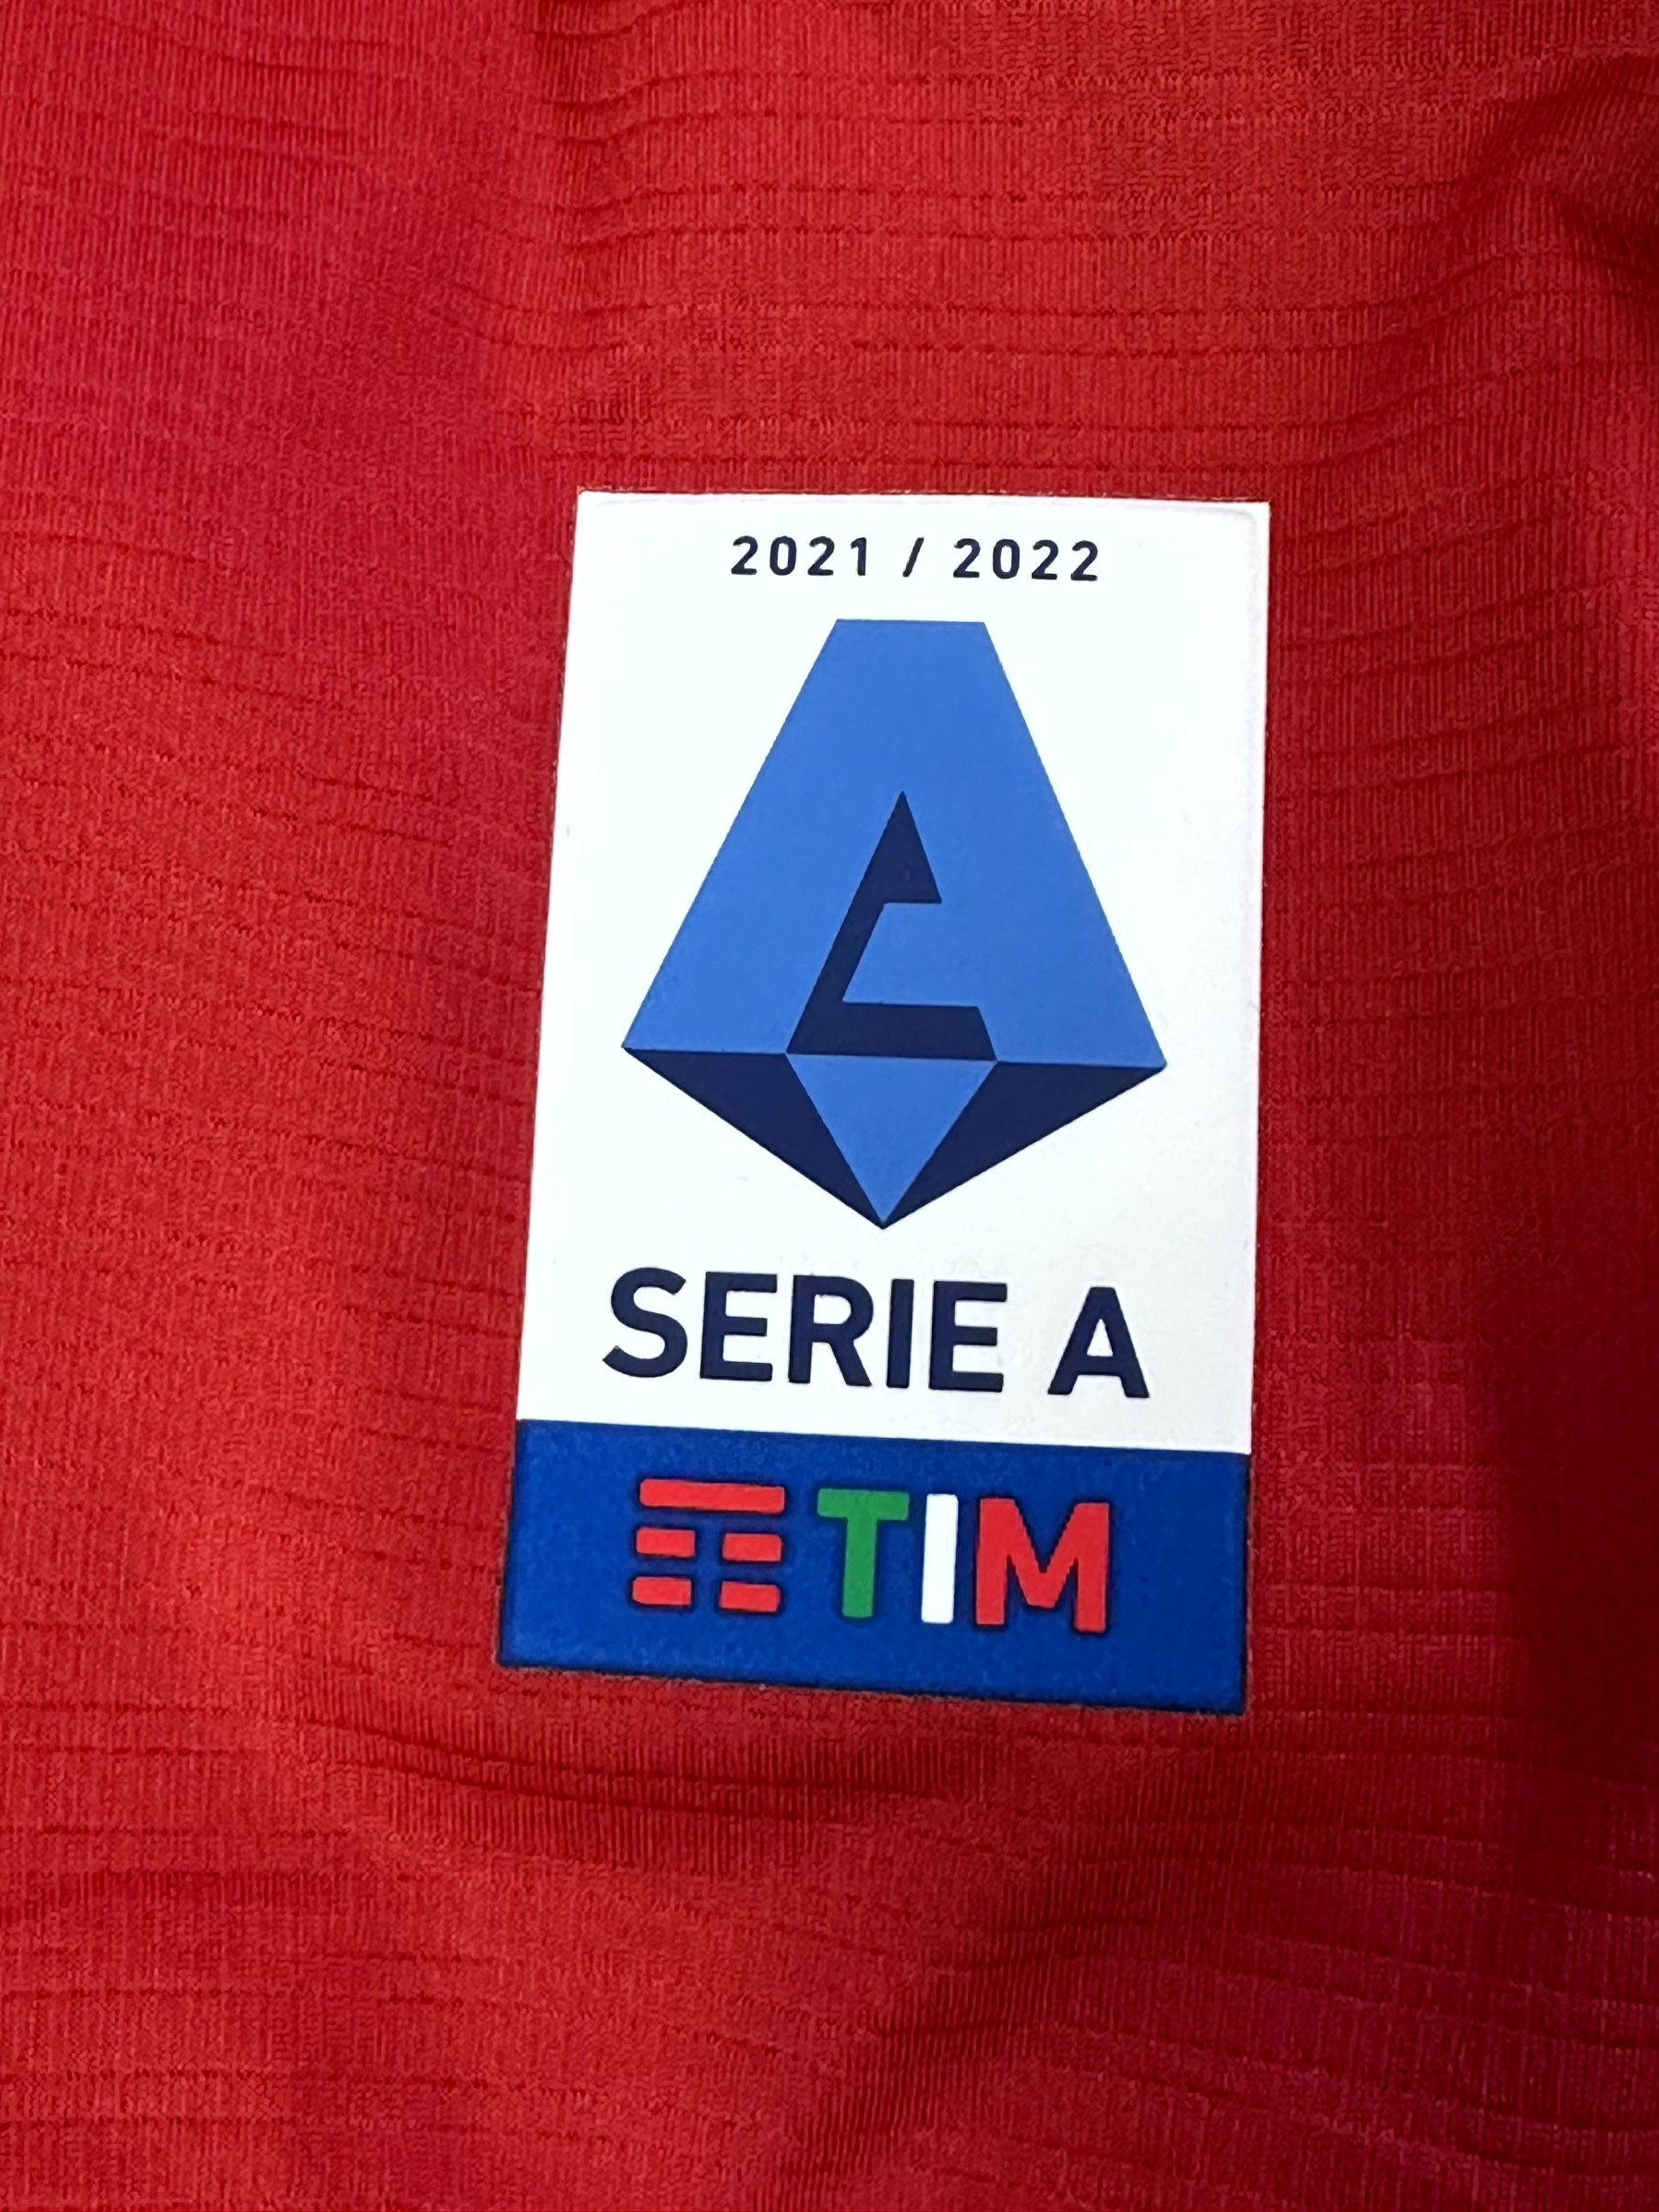 Torreira's Signed Match Shirt, Fiorentina-Bologna 2022 - CharityStars